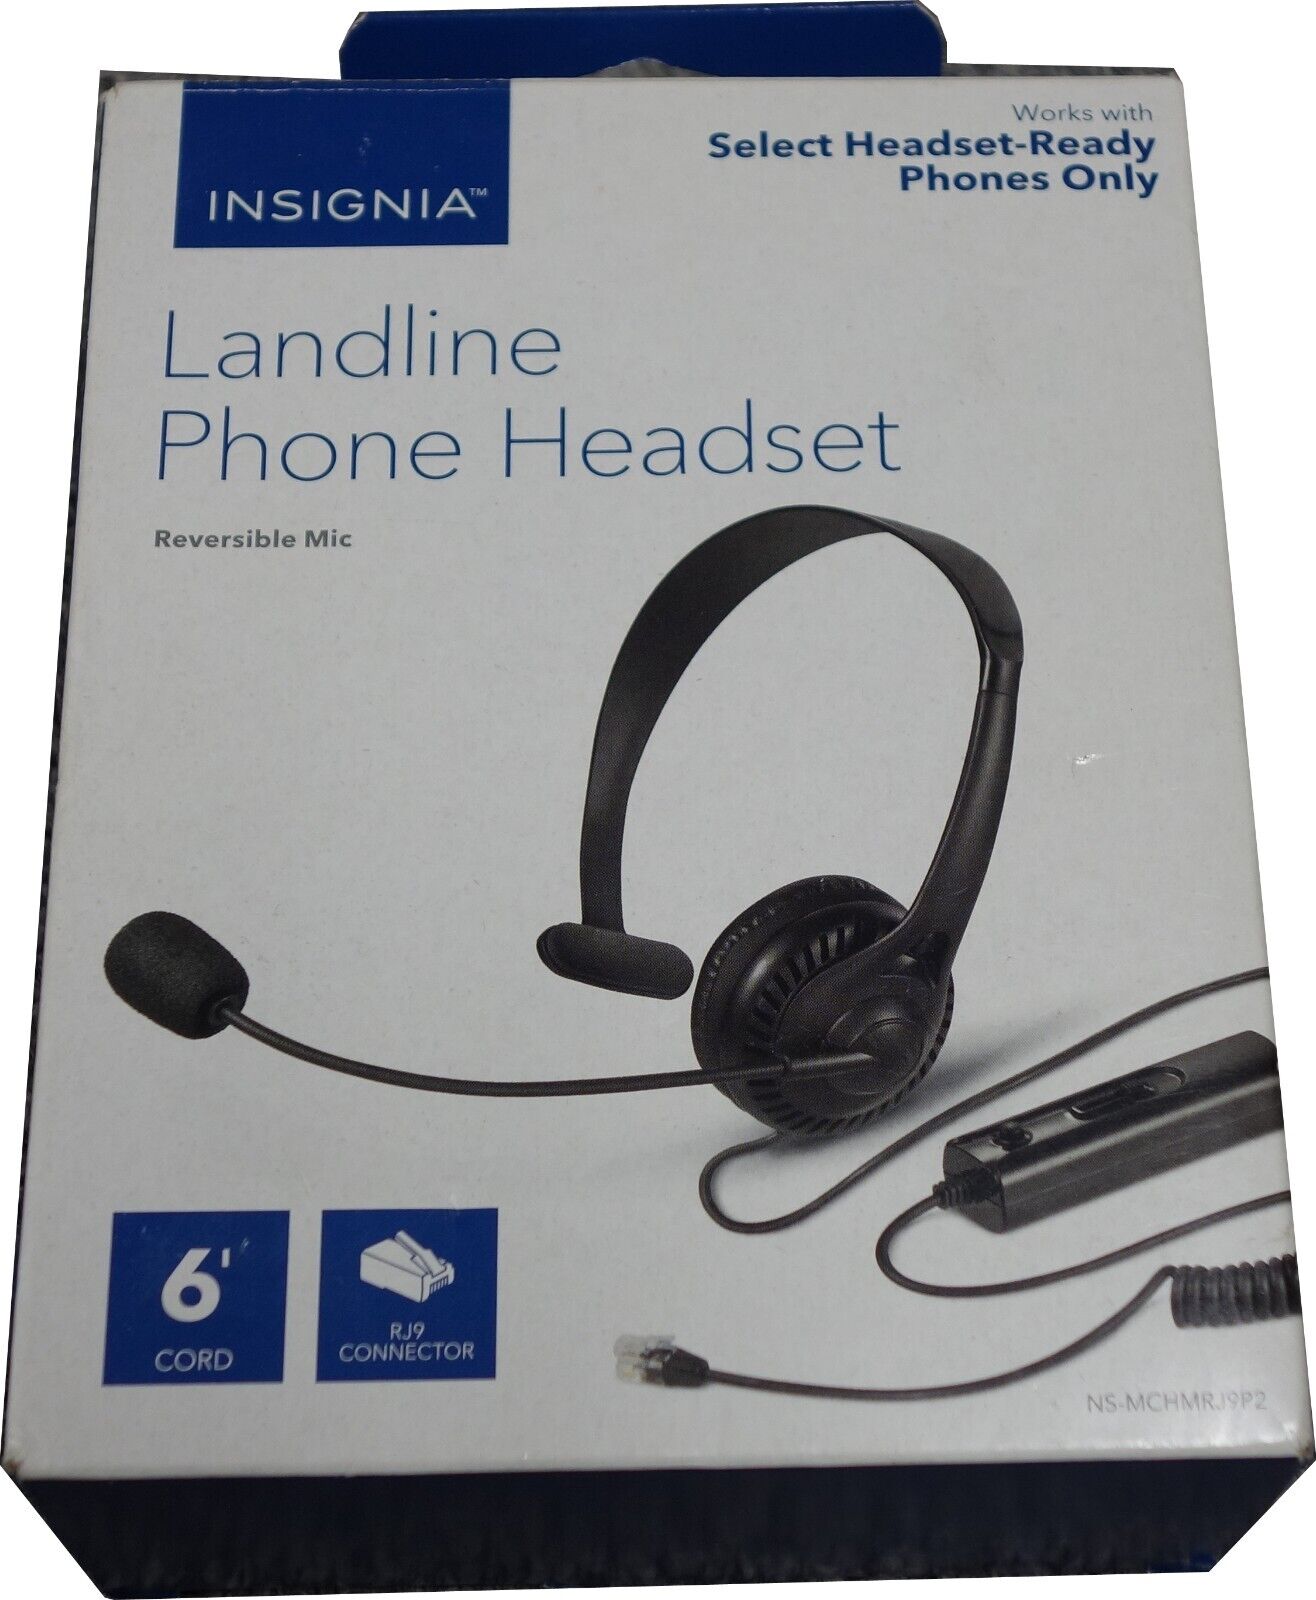 Insignia Landline Phone Headset HANDS FREE RJ9 Connector NS-MCHMRJ9P2 NEW